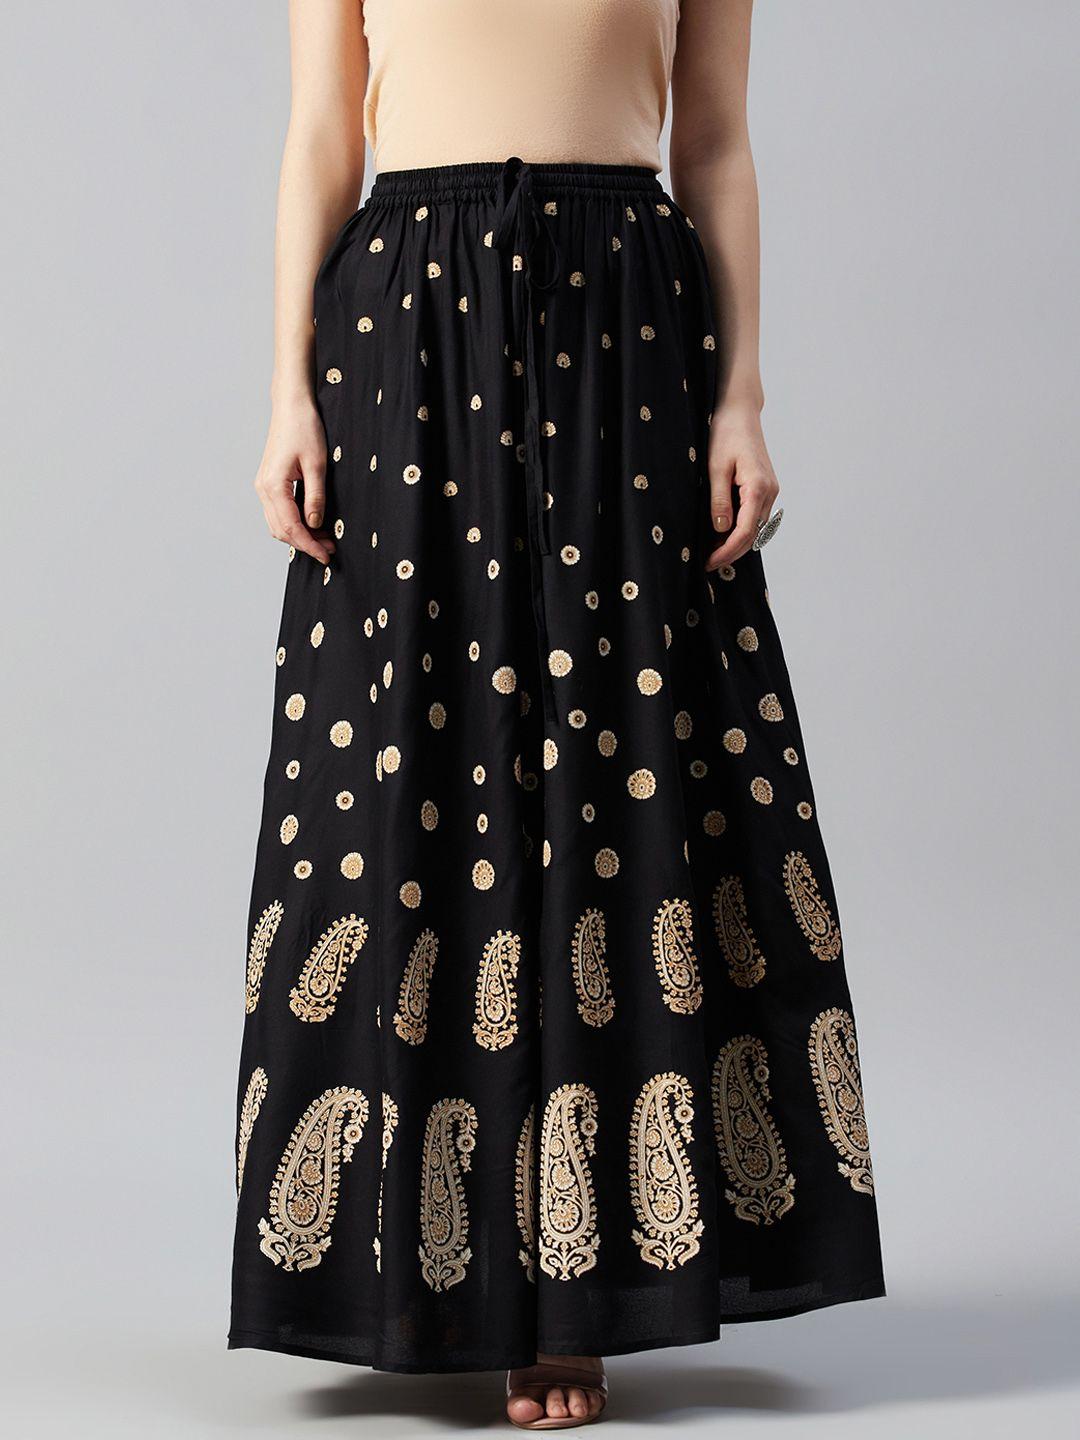 anayna women black & beige ethnic motifs print flared maxi skirt